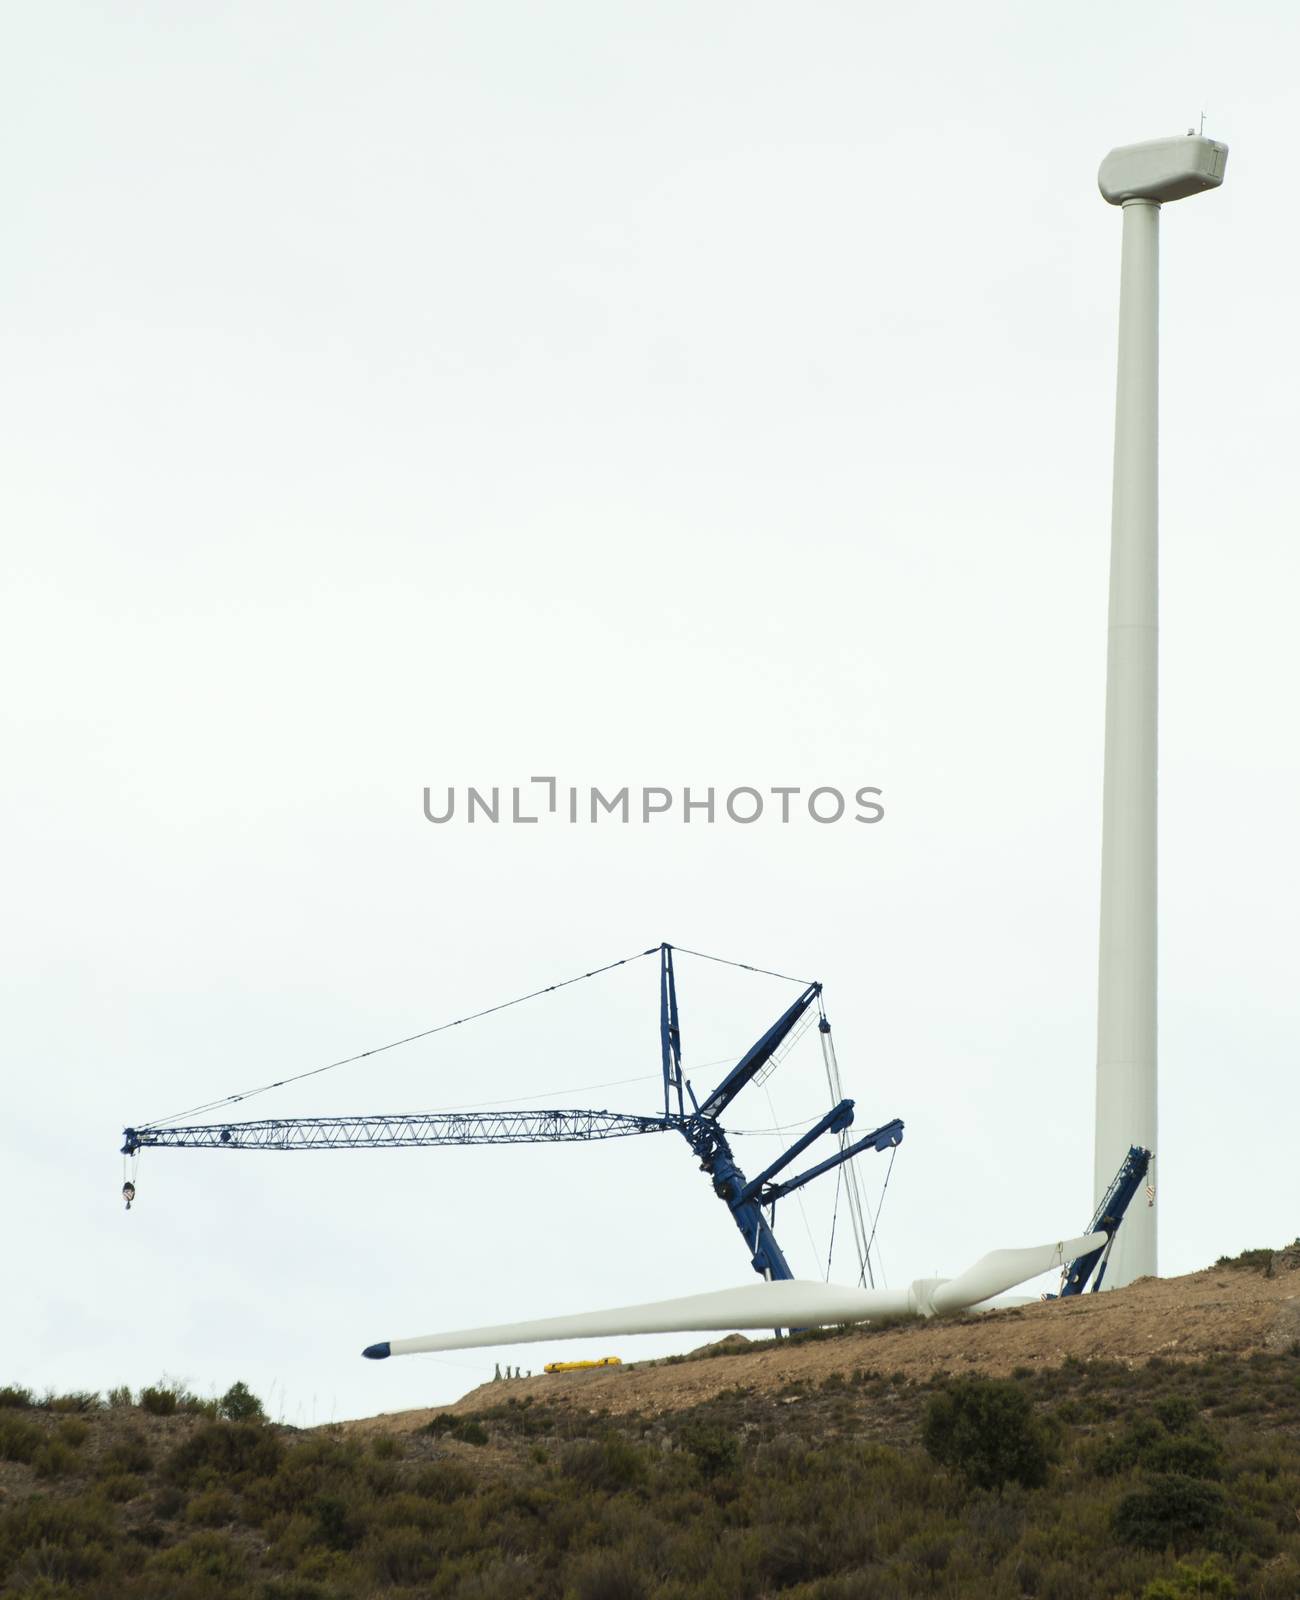 Installation of wind turbines